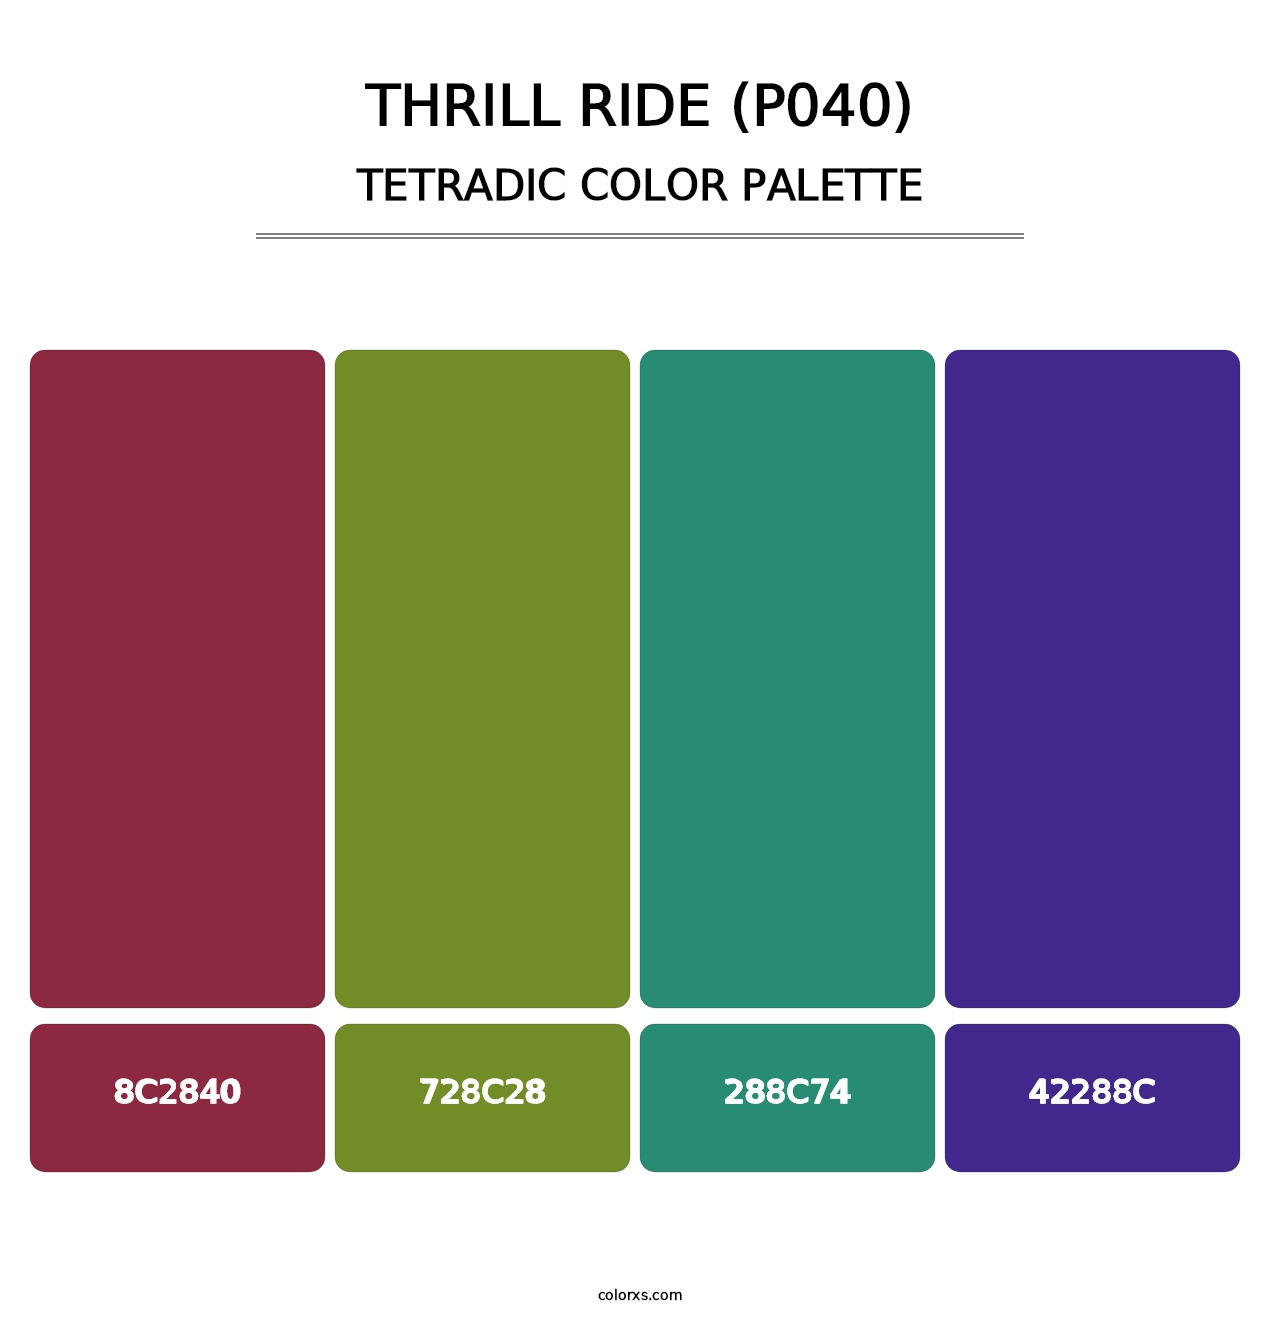 Thrill Ride (P040) - Tetradic Color Palette